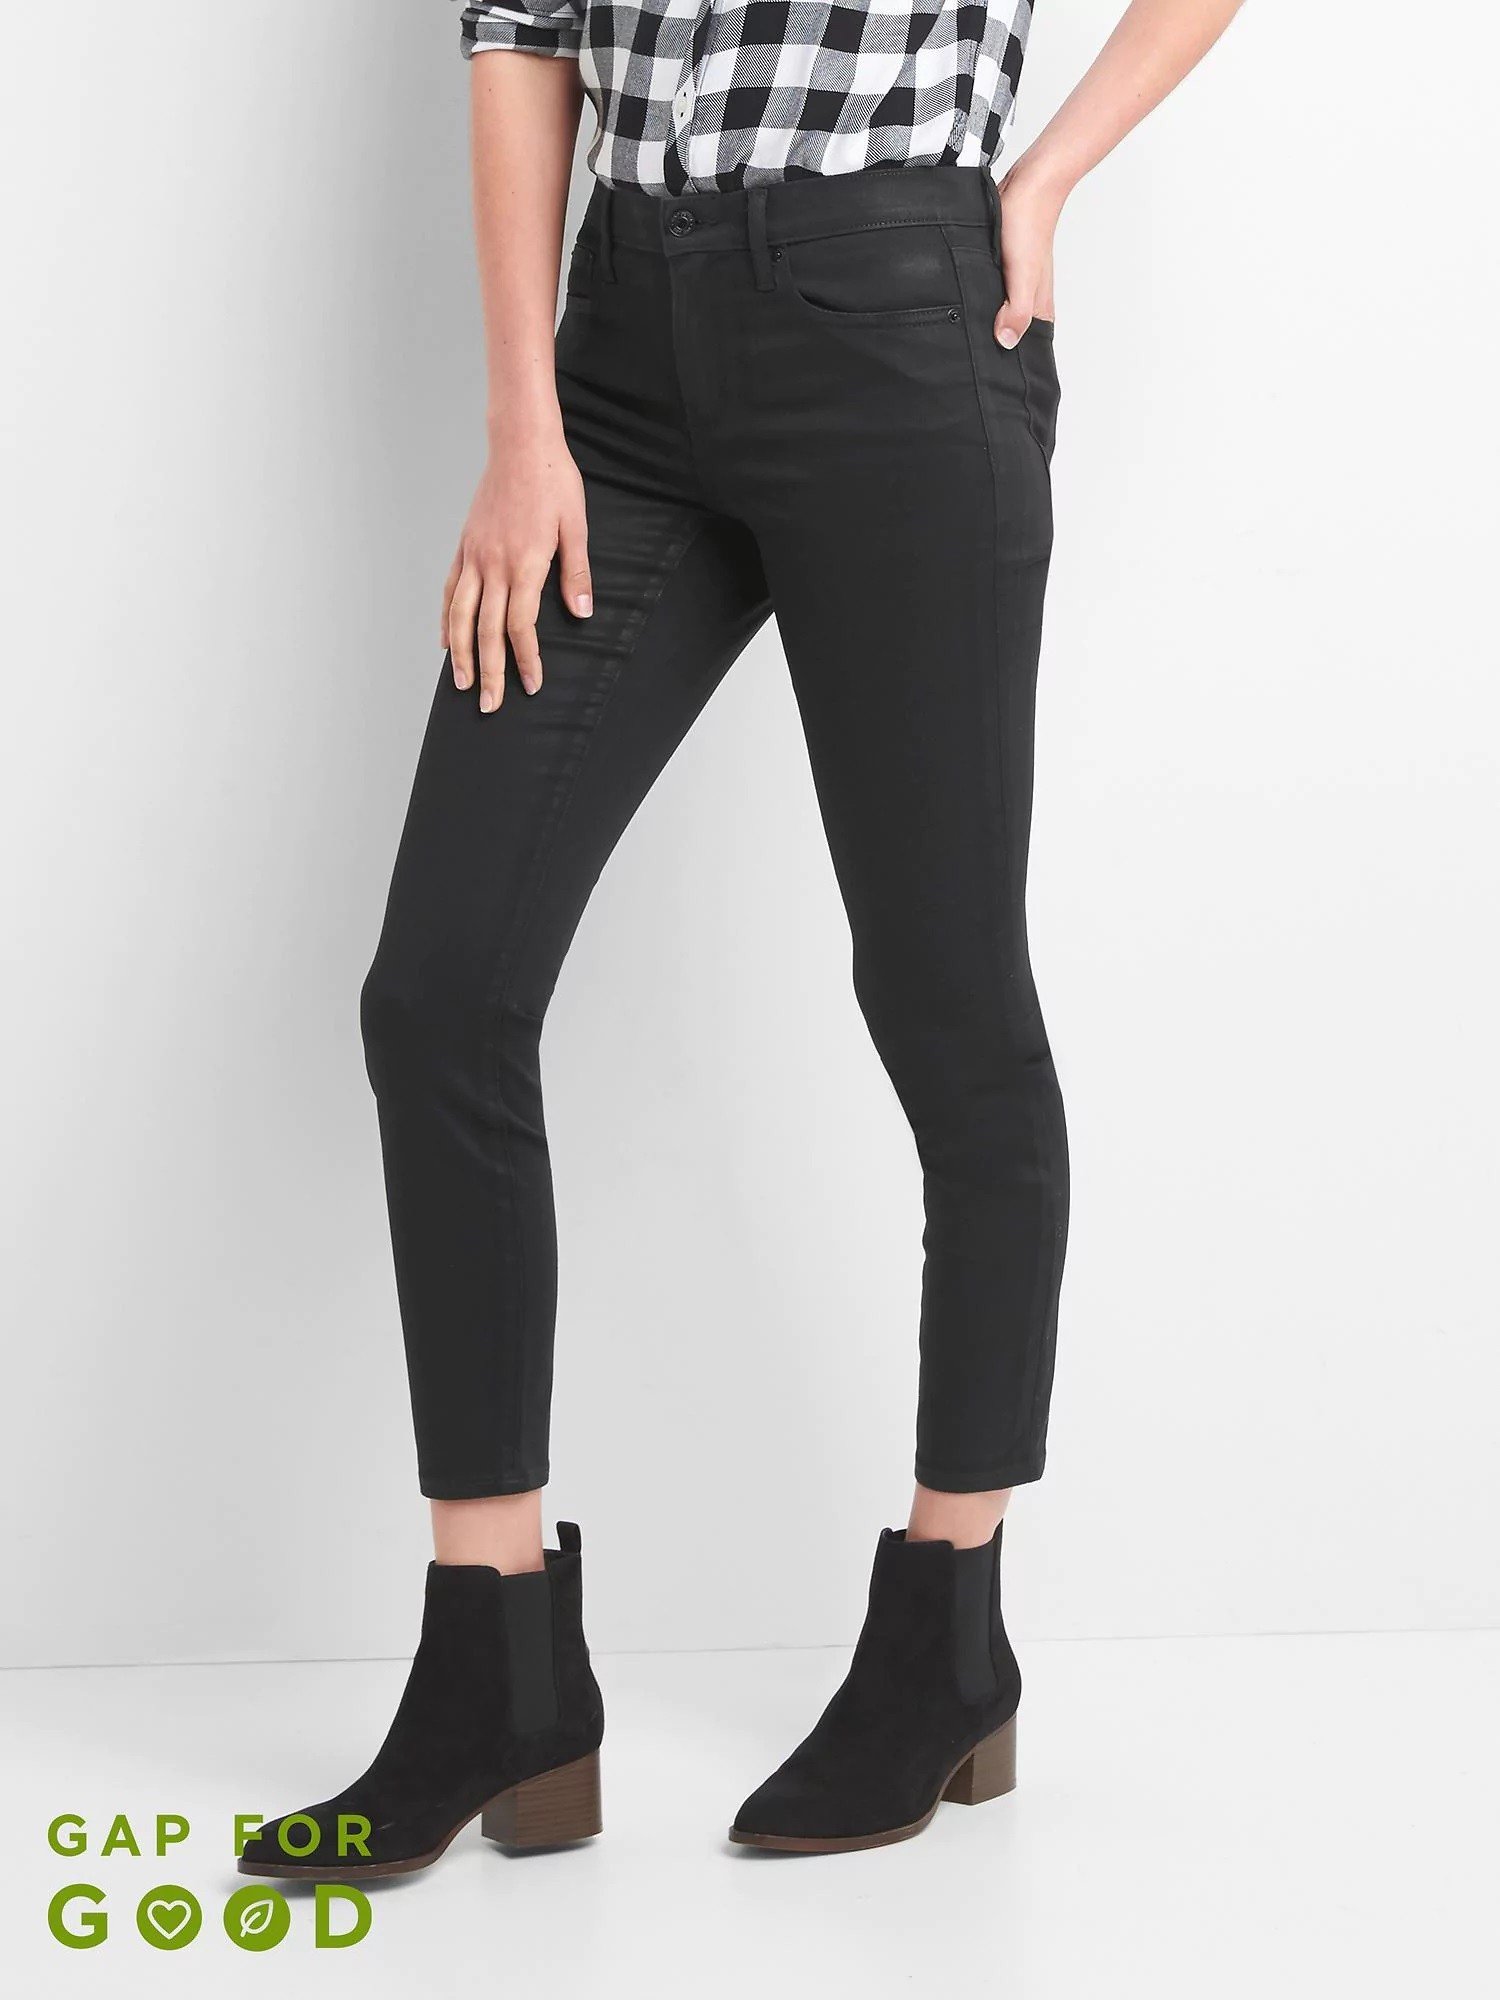 Orta belli true skinny jean pantolon product image